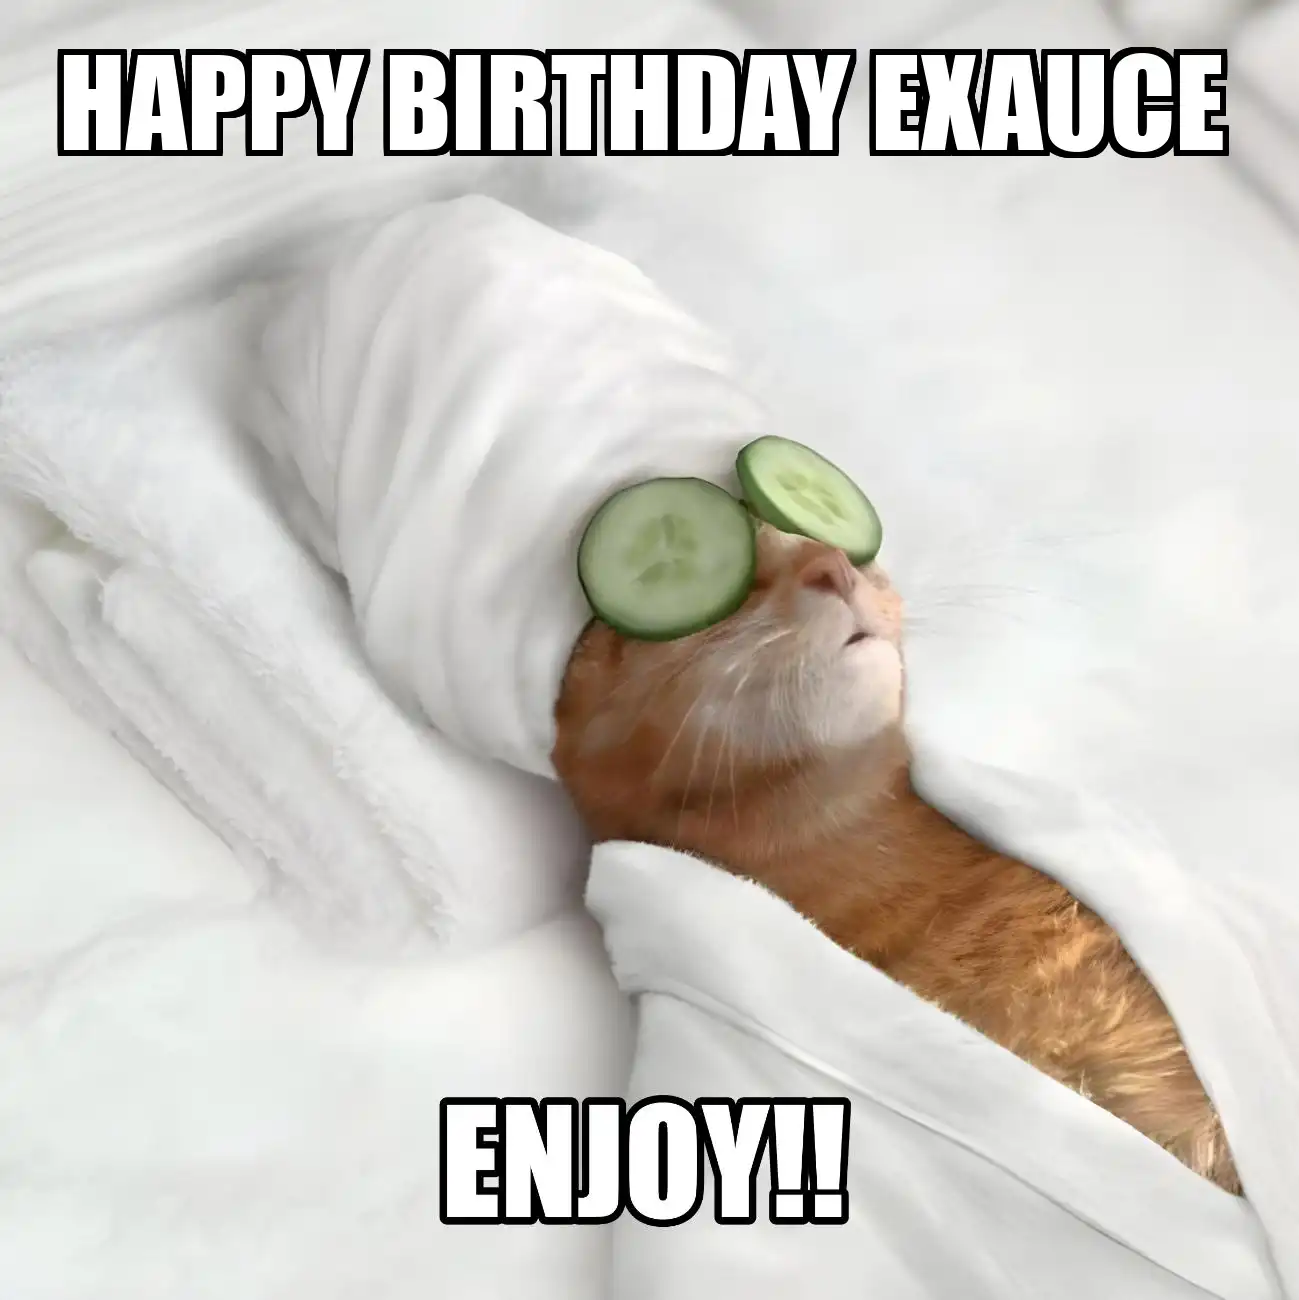 Happy Birthday Exauce Enjoy Cat Meme